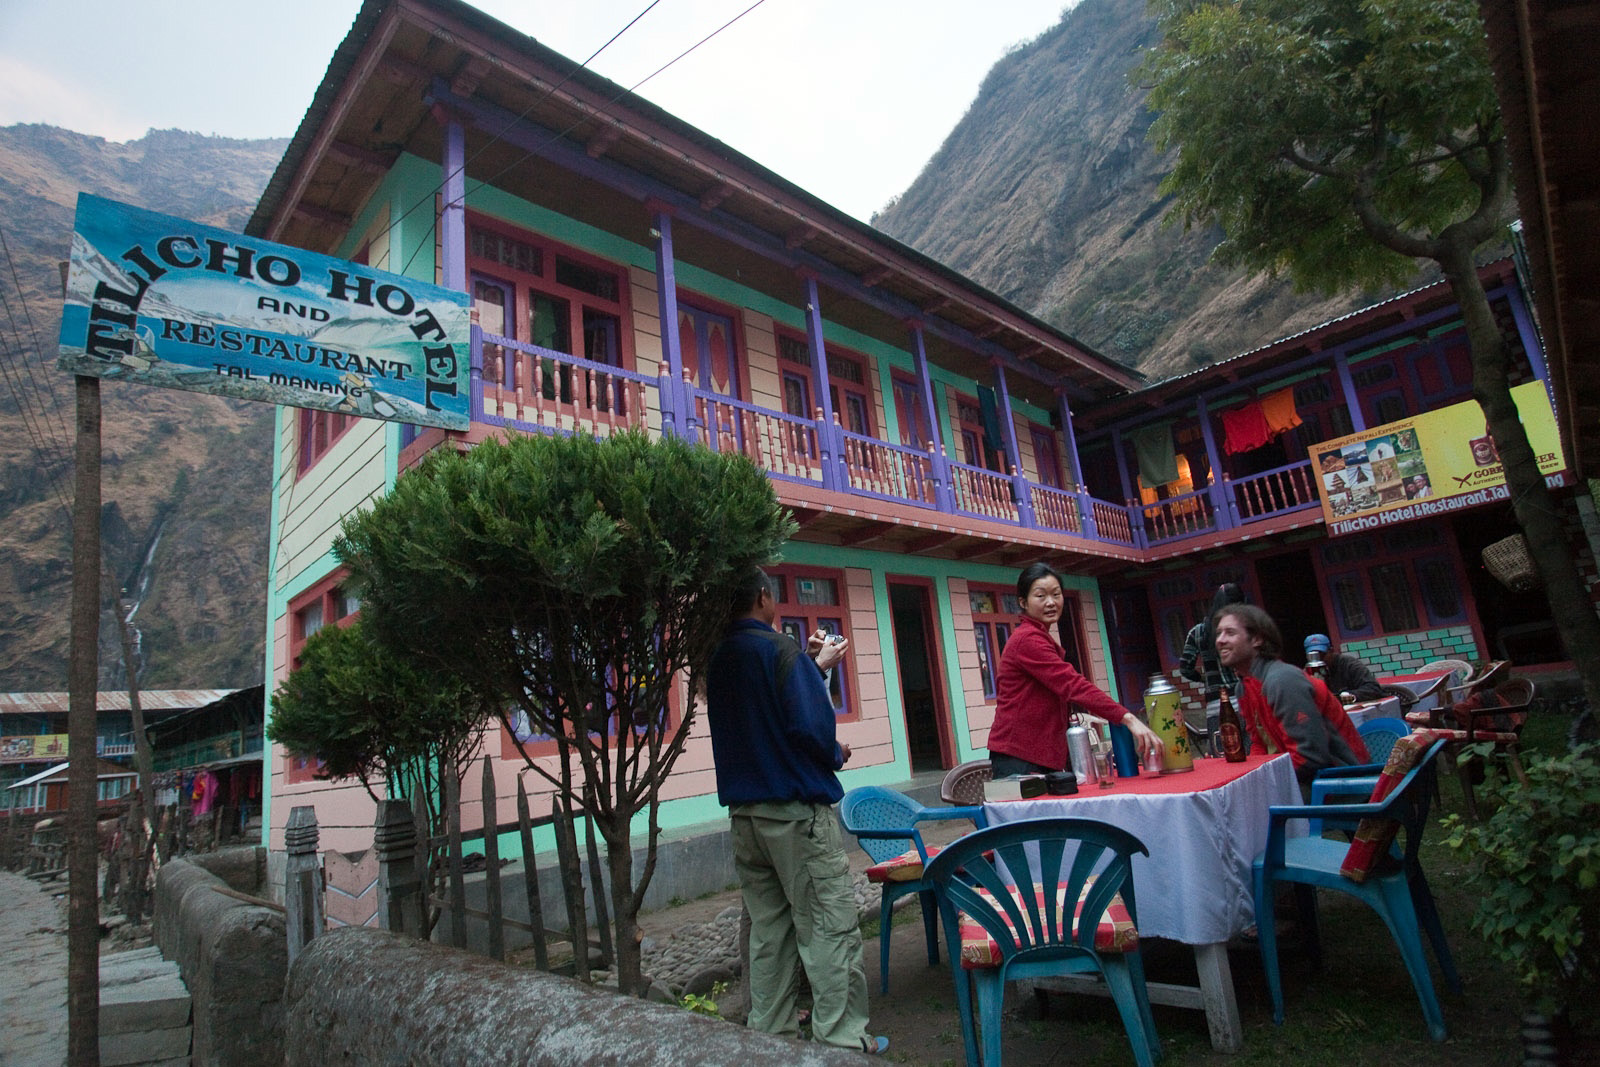 A teahouse on the Annapurna Circuit | Flickr Credit: Greg Willis